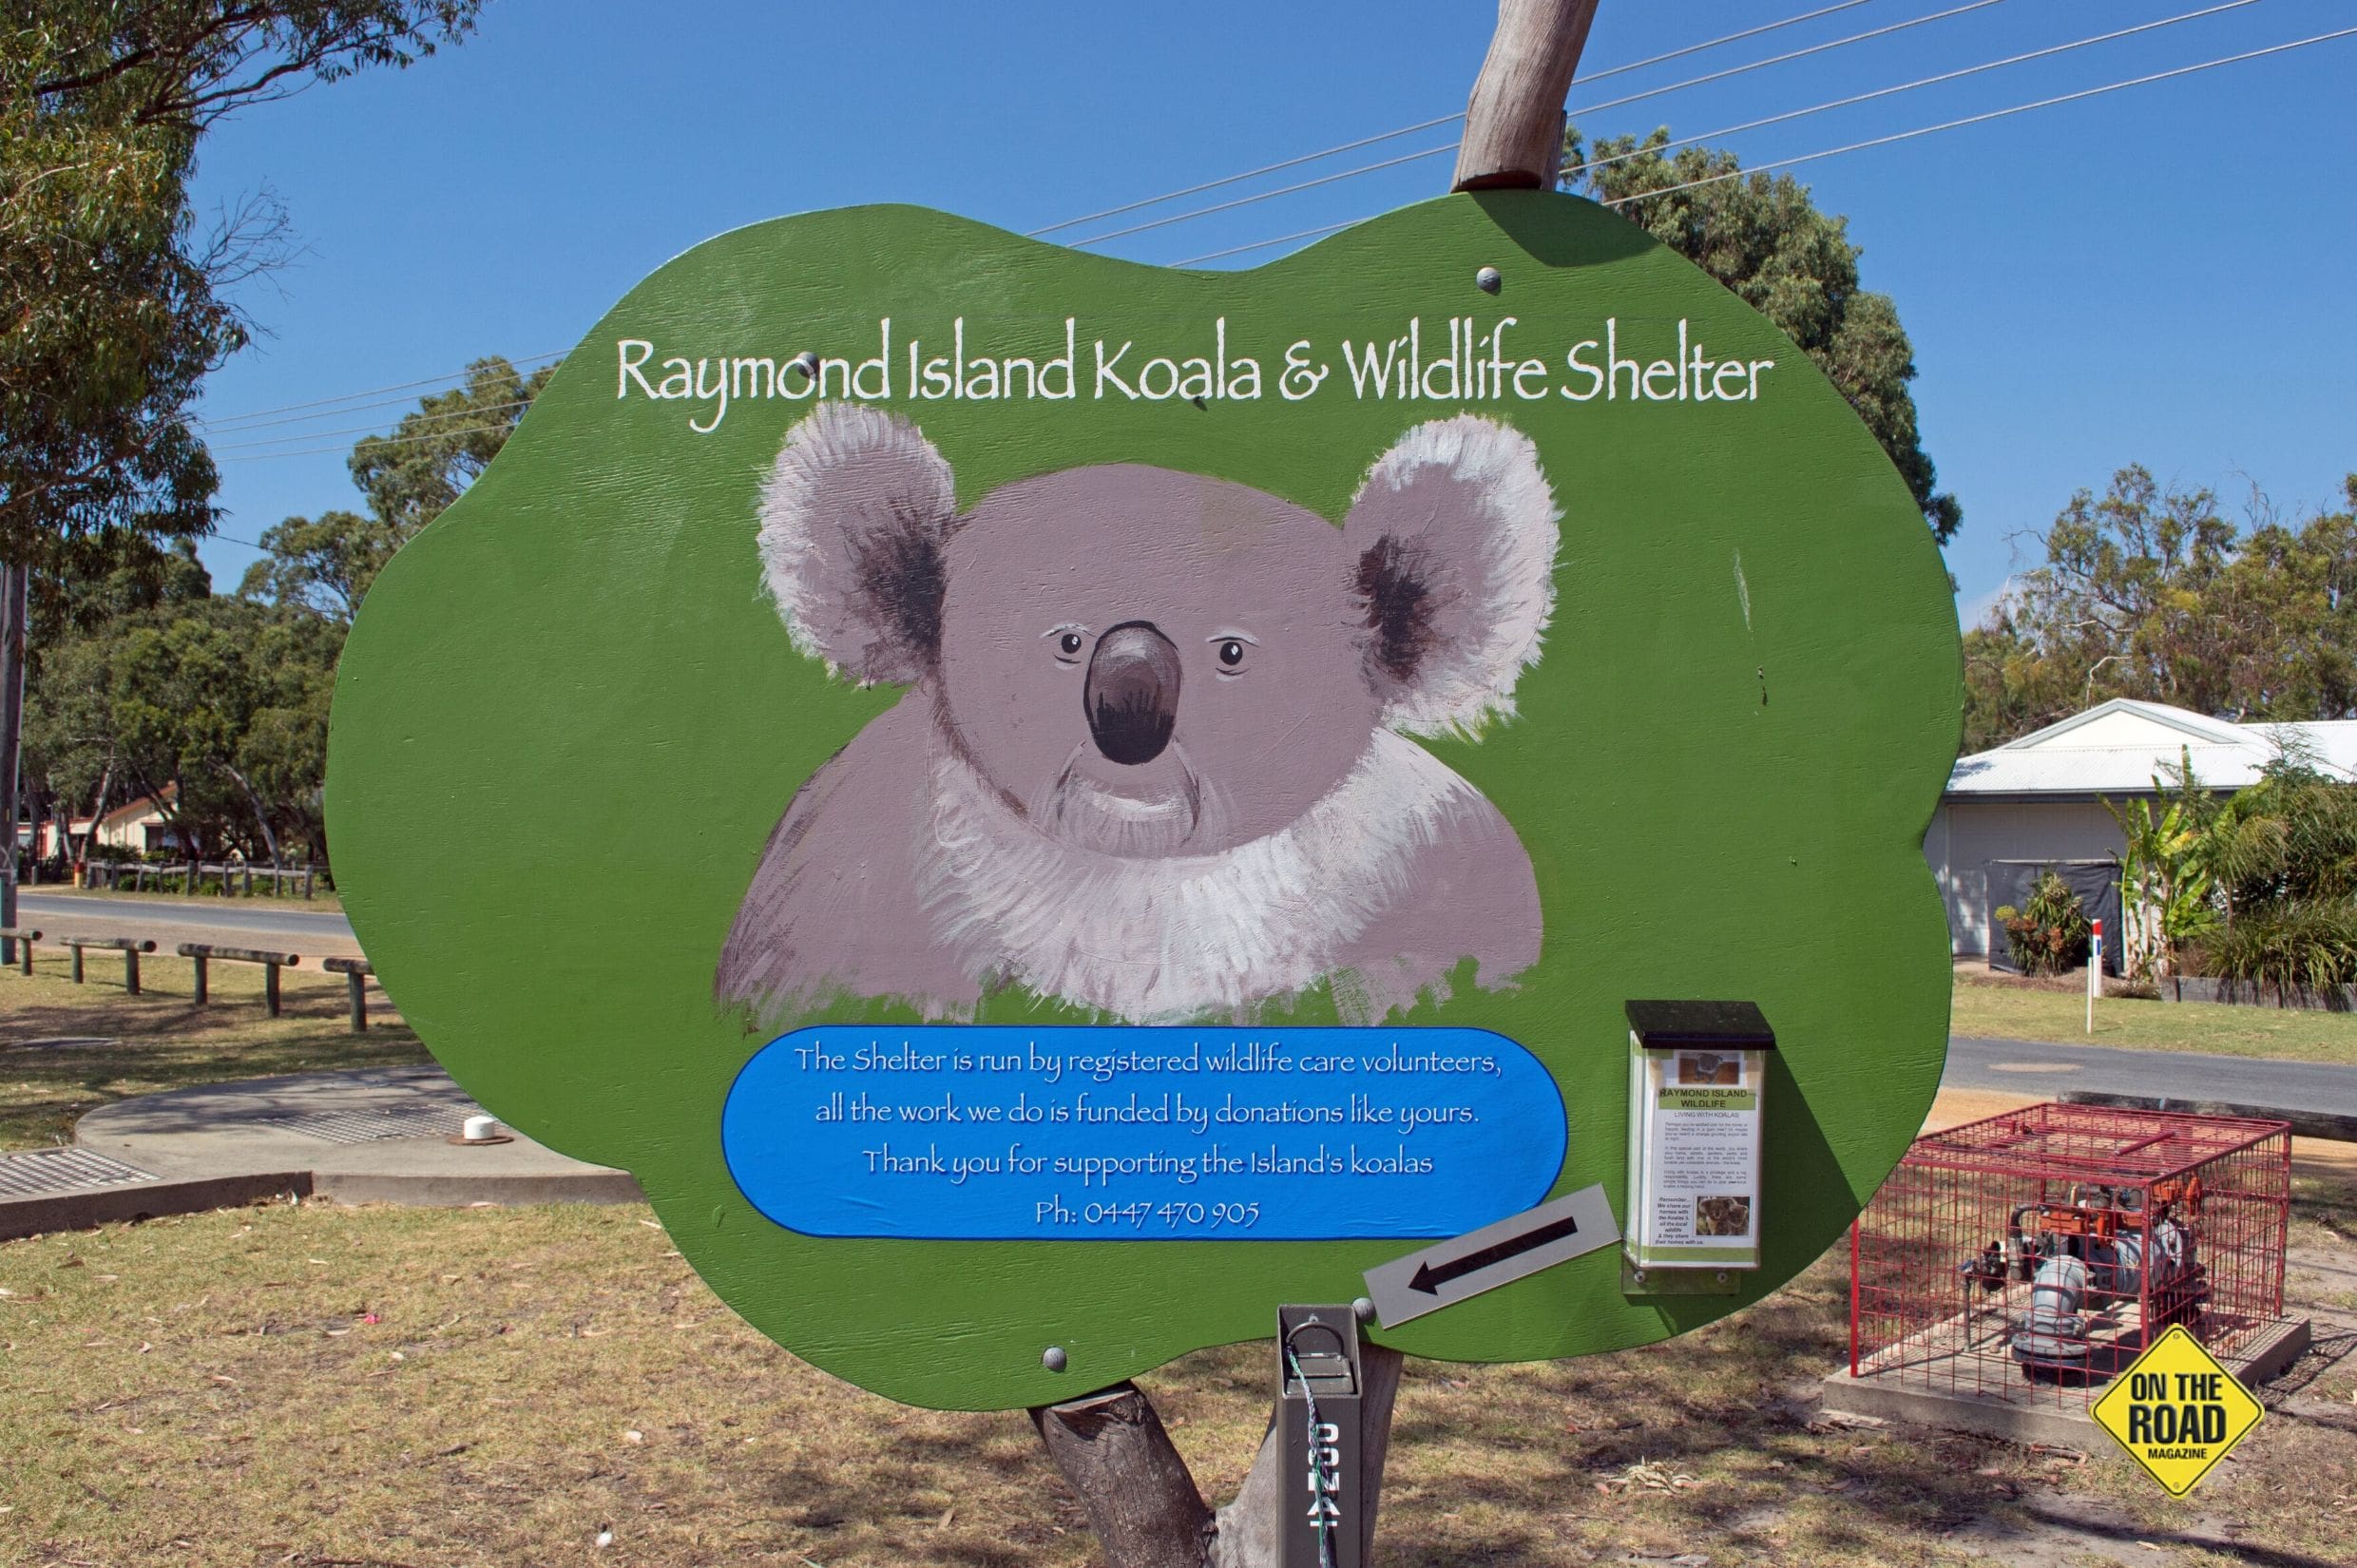 Raymond Island is famous for its Koala population